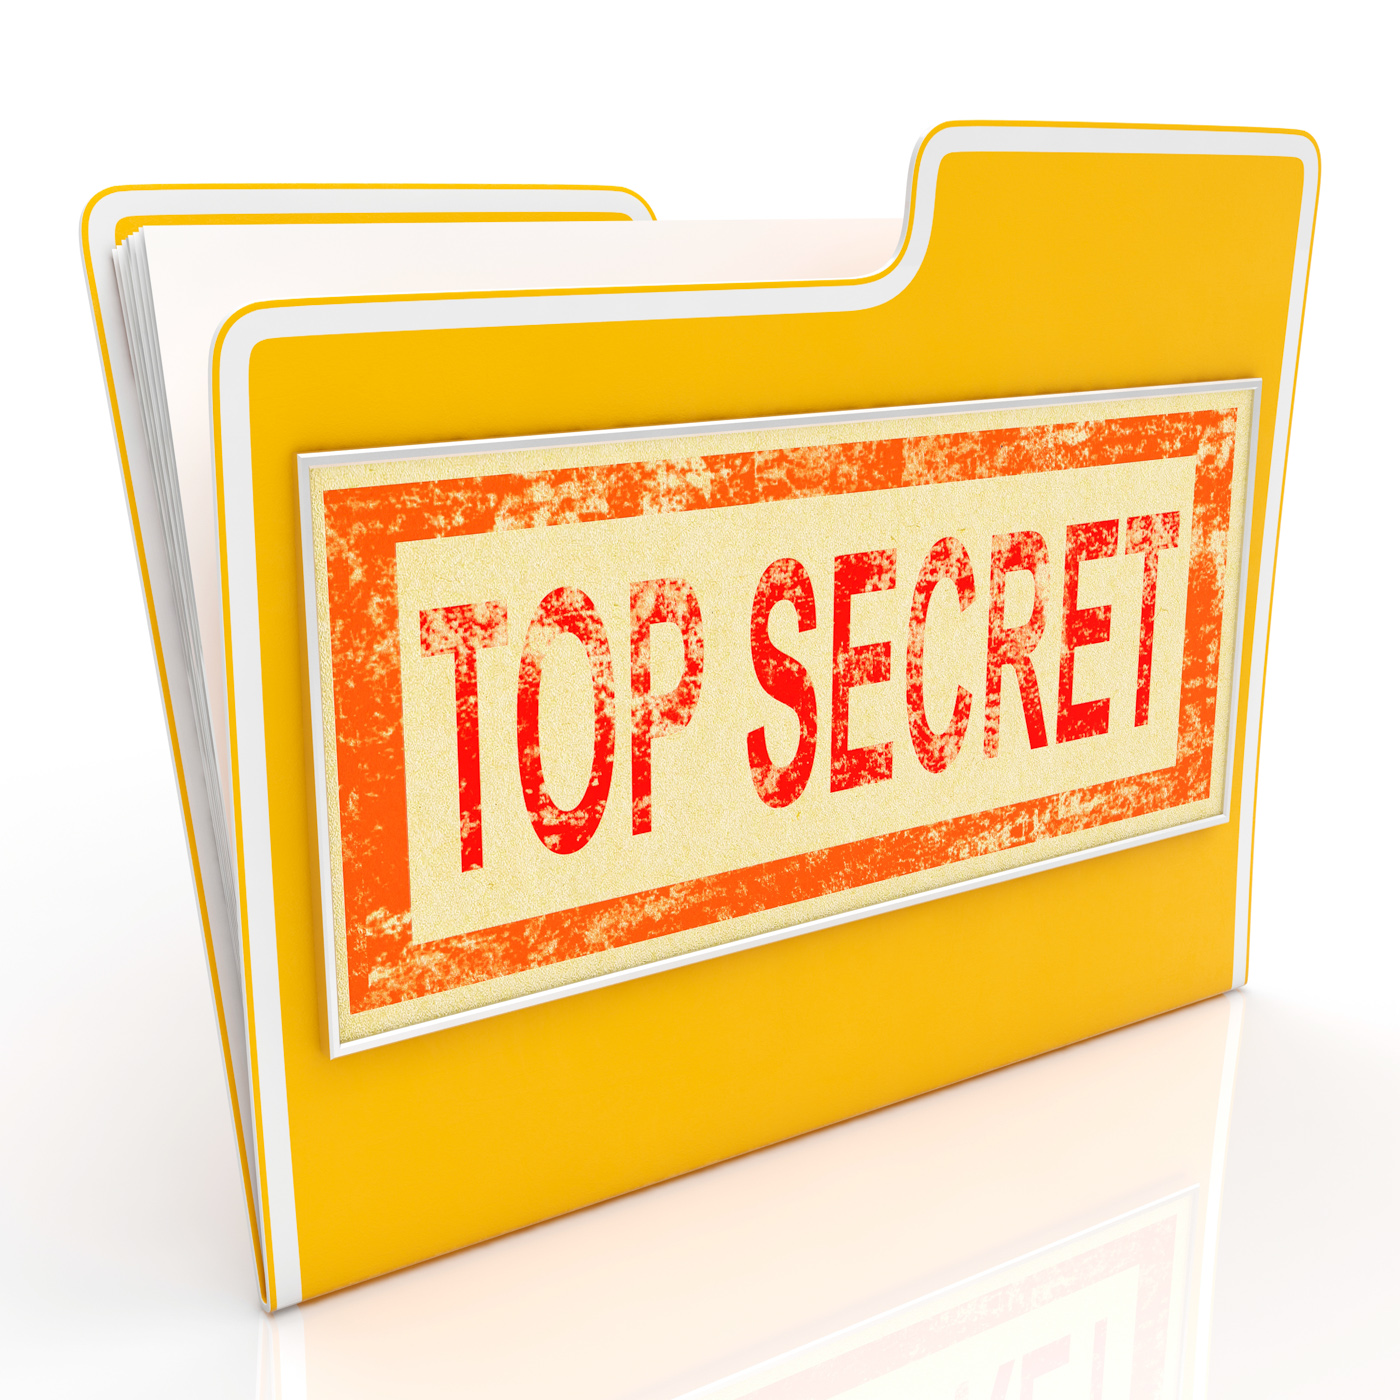 Top secret file shows private folder or files photo